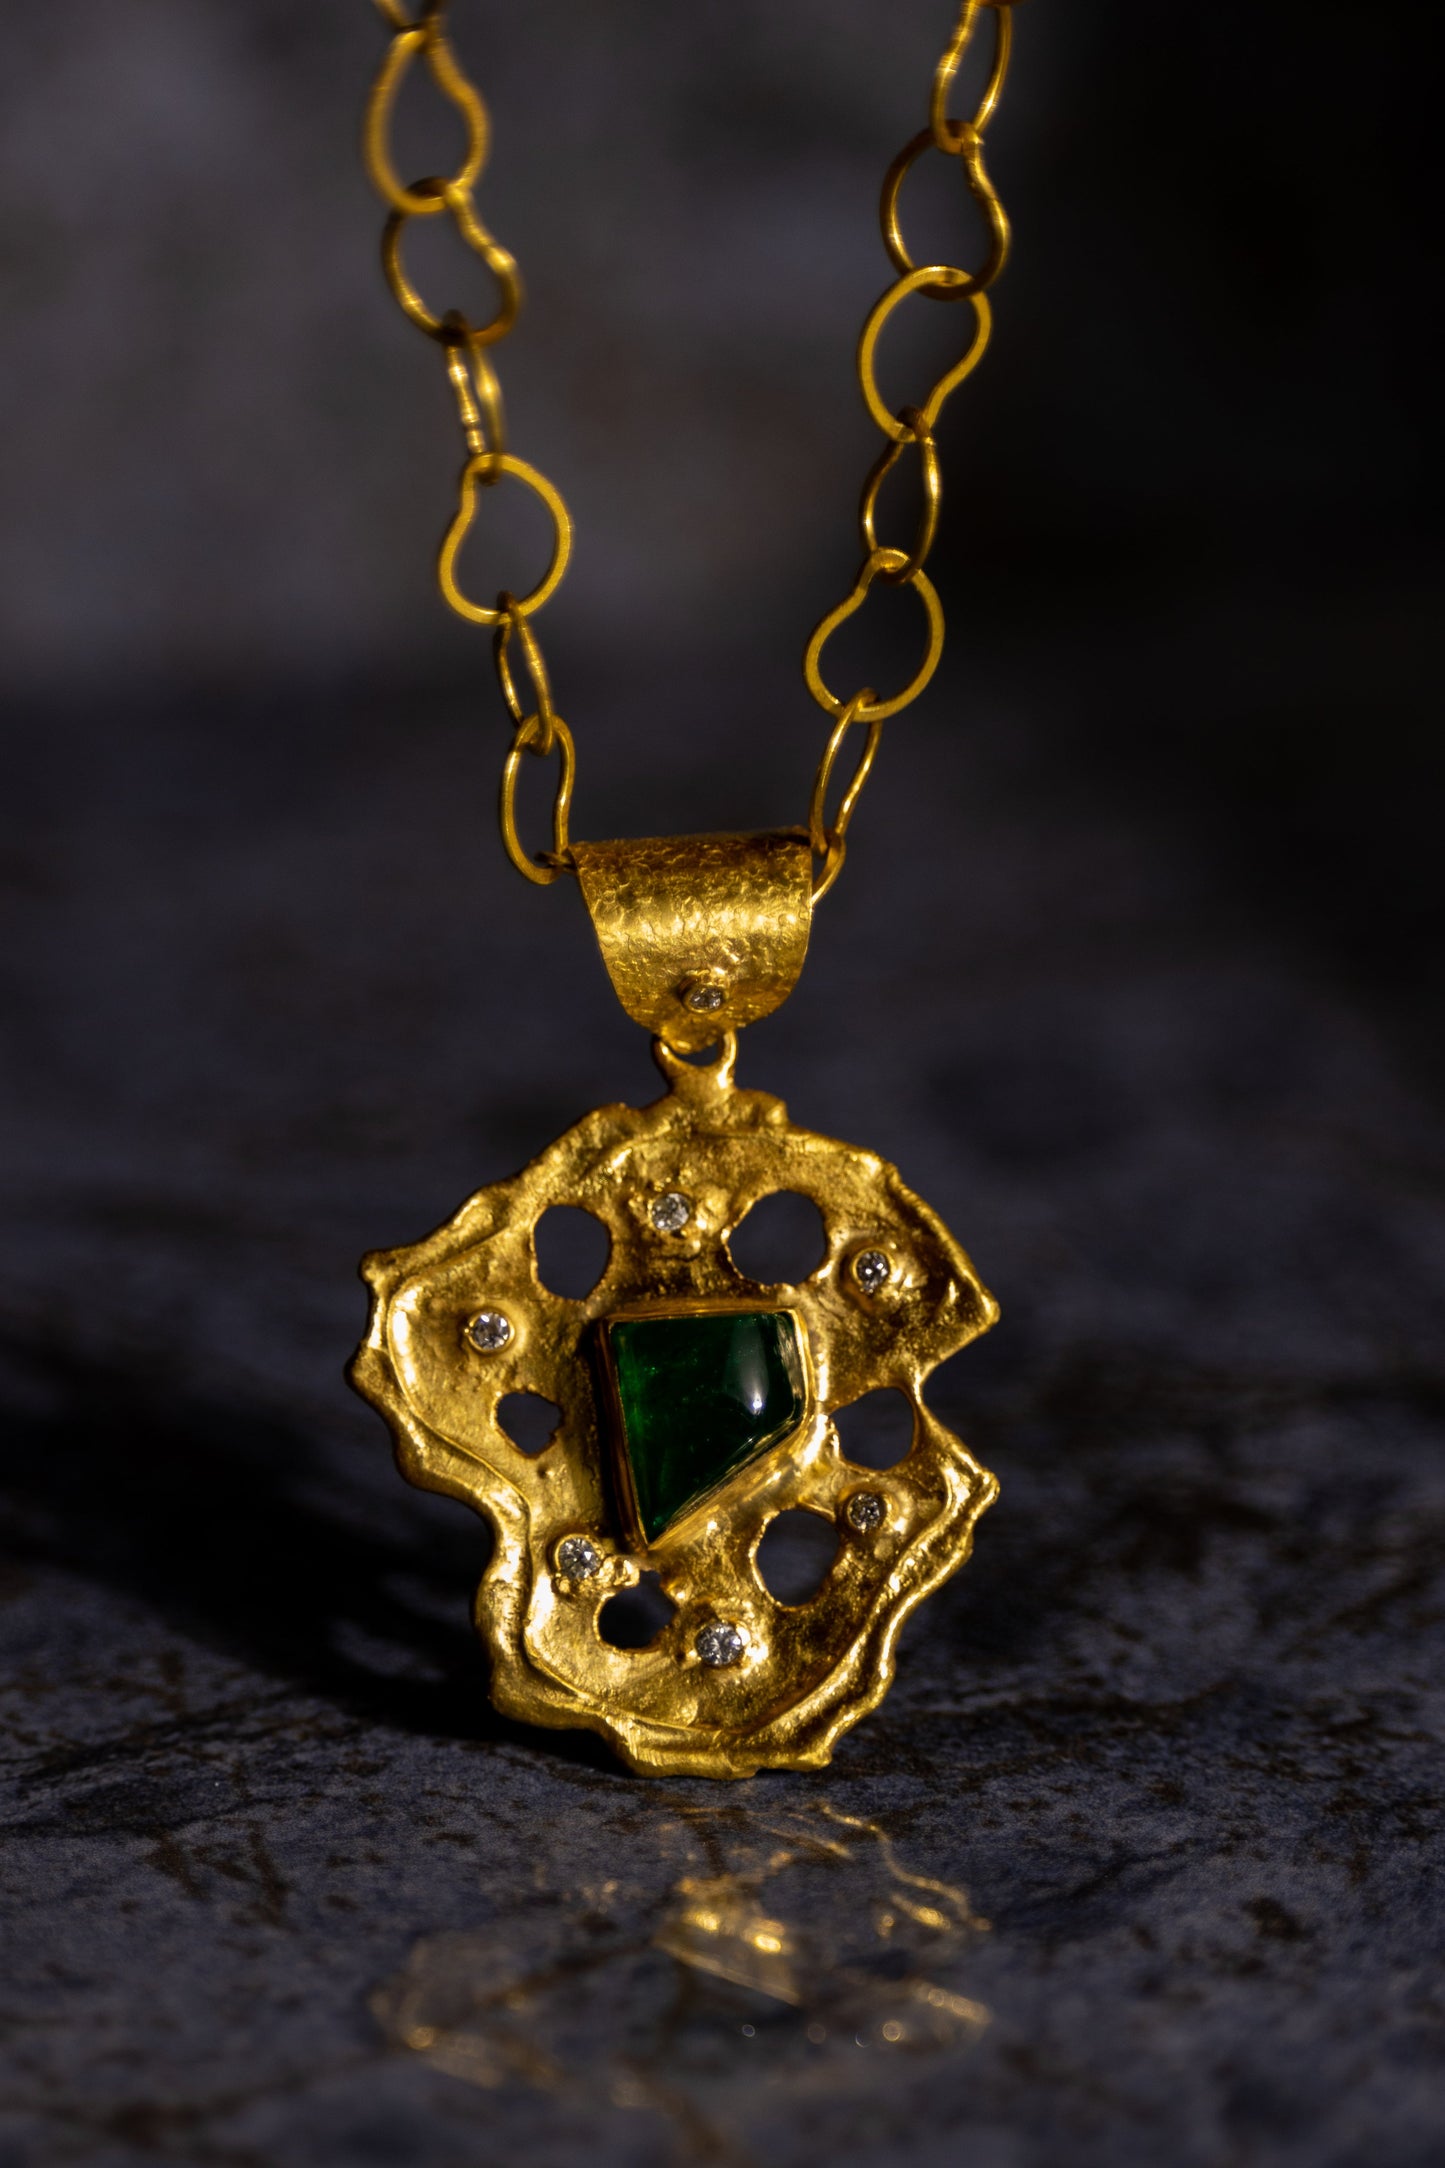 Abstract Emerald Cabochon Pendant